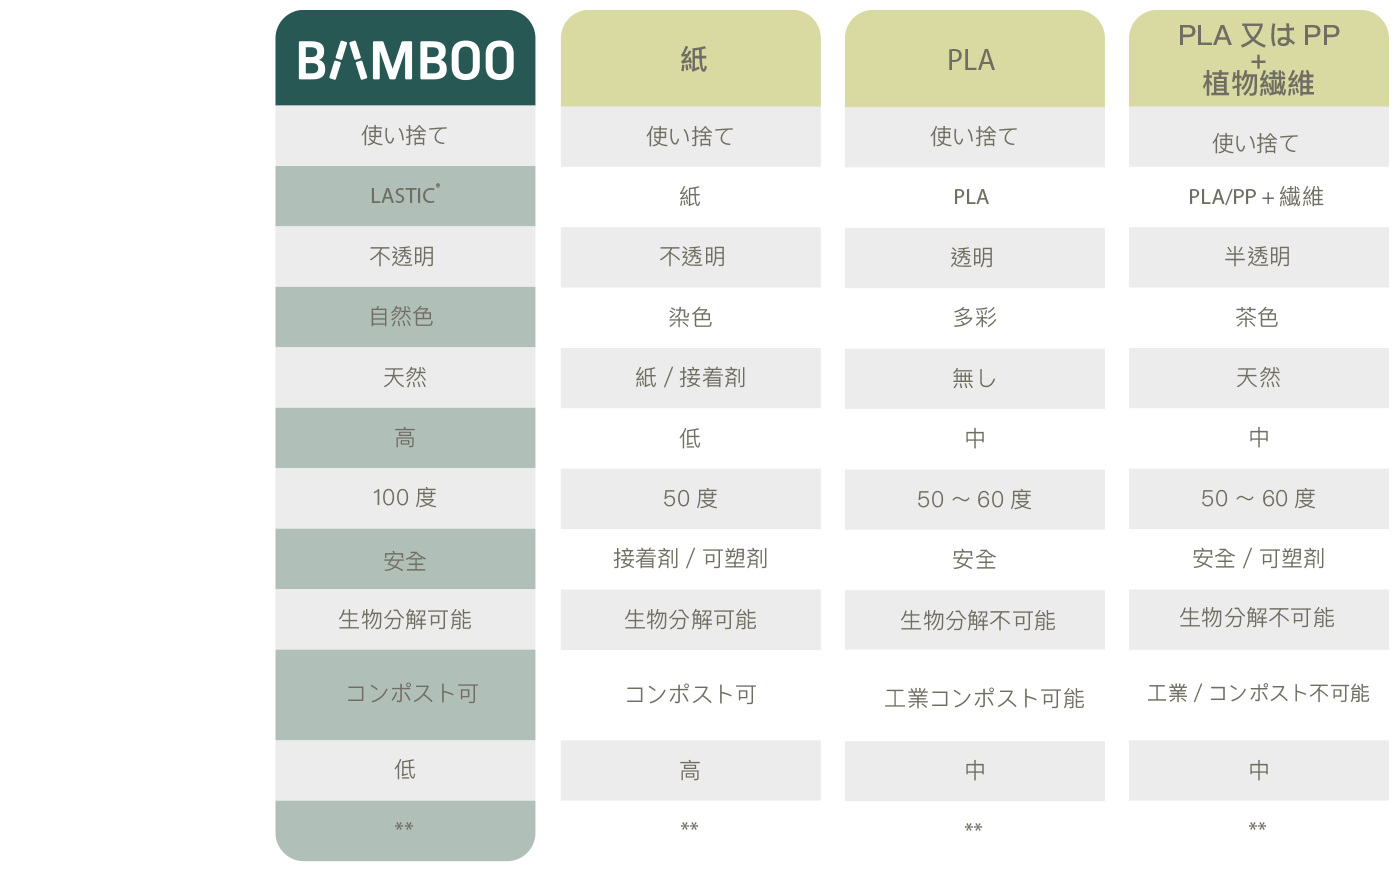 Bamboo Fibre Tableware & Straws - Comparison to traditional materials